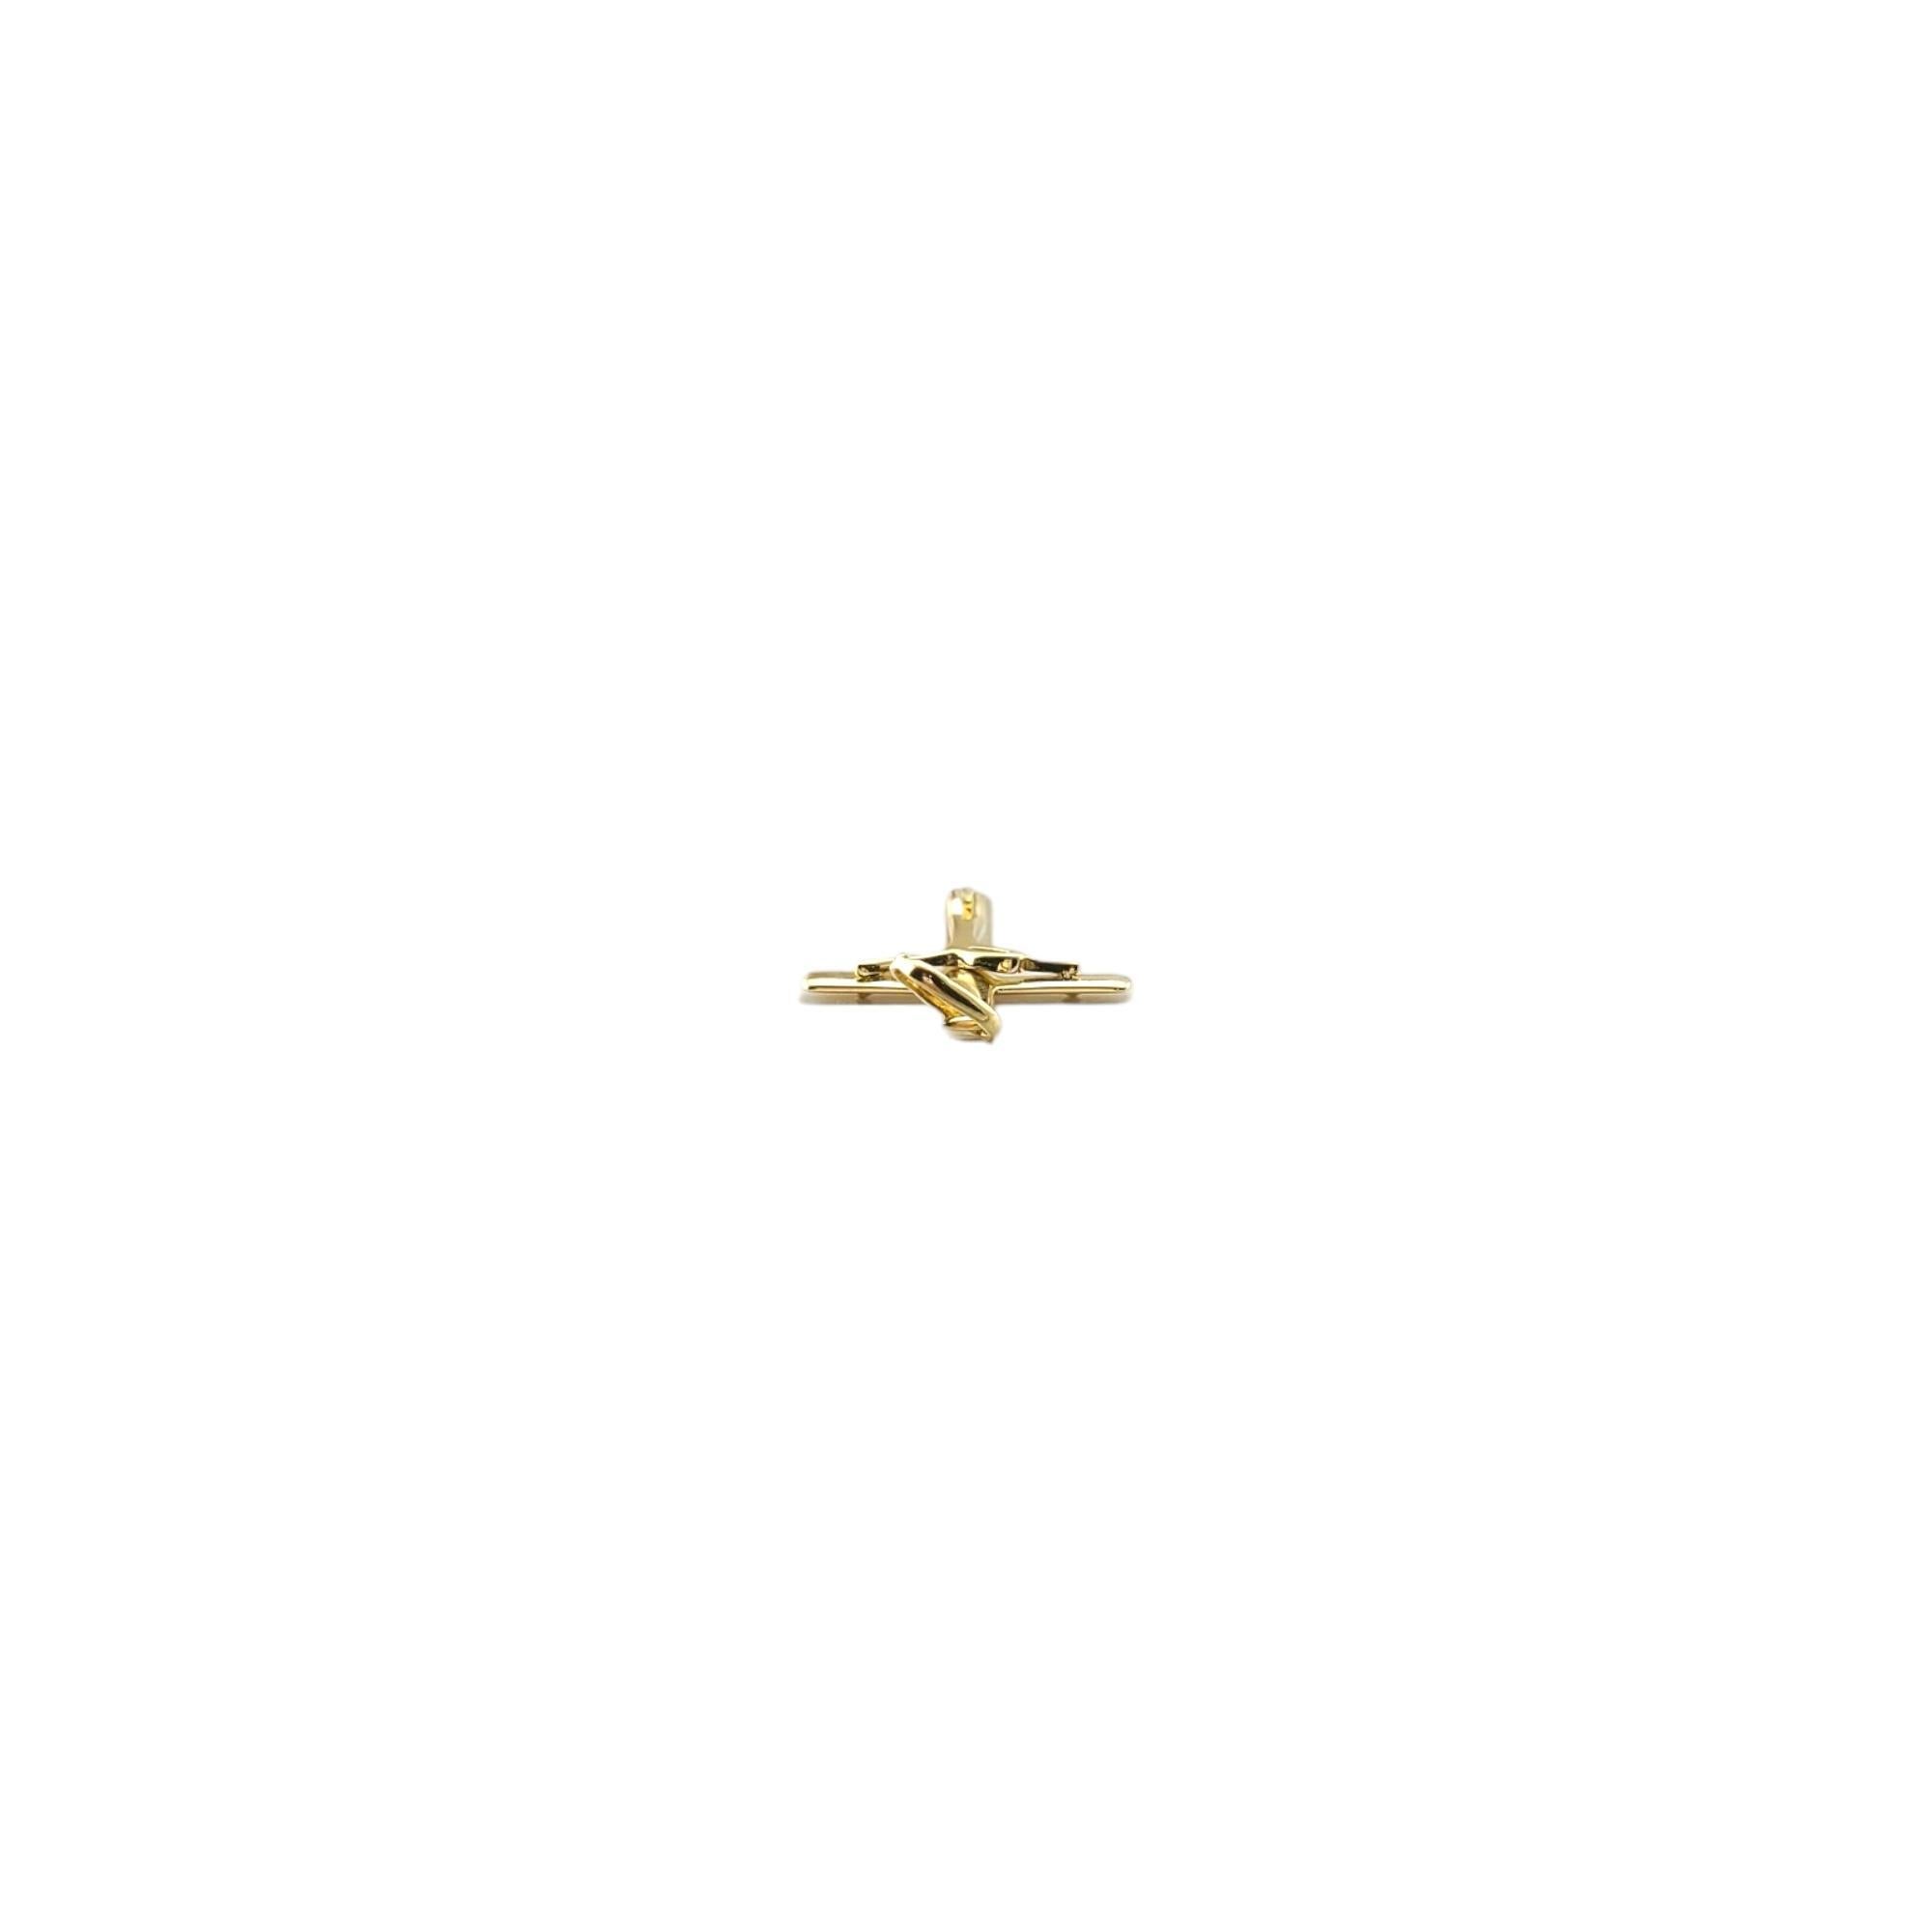 18K Yellow Gold Stylized Crucifix Charm #17433 For Sale 1